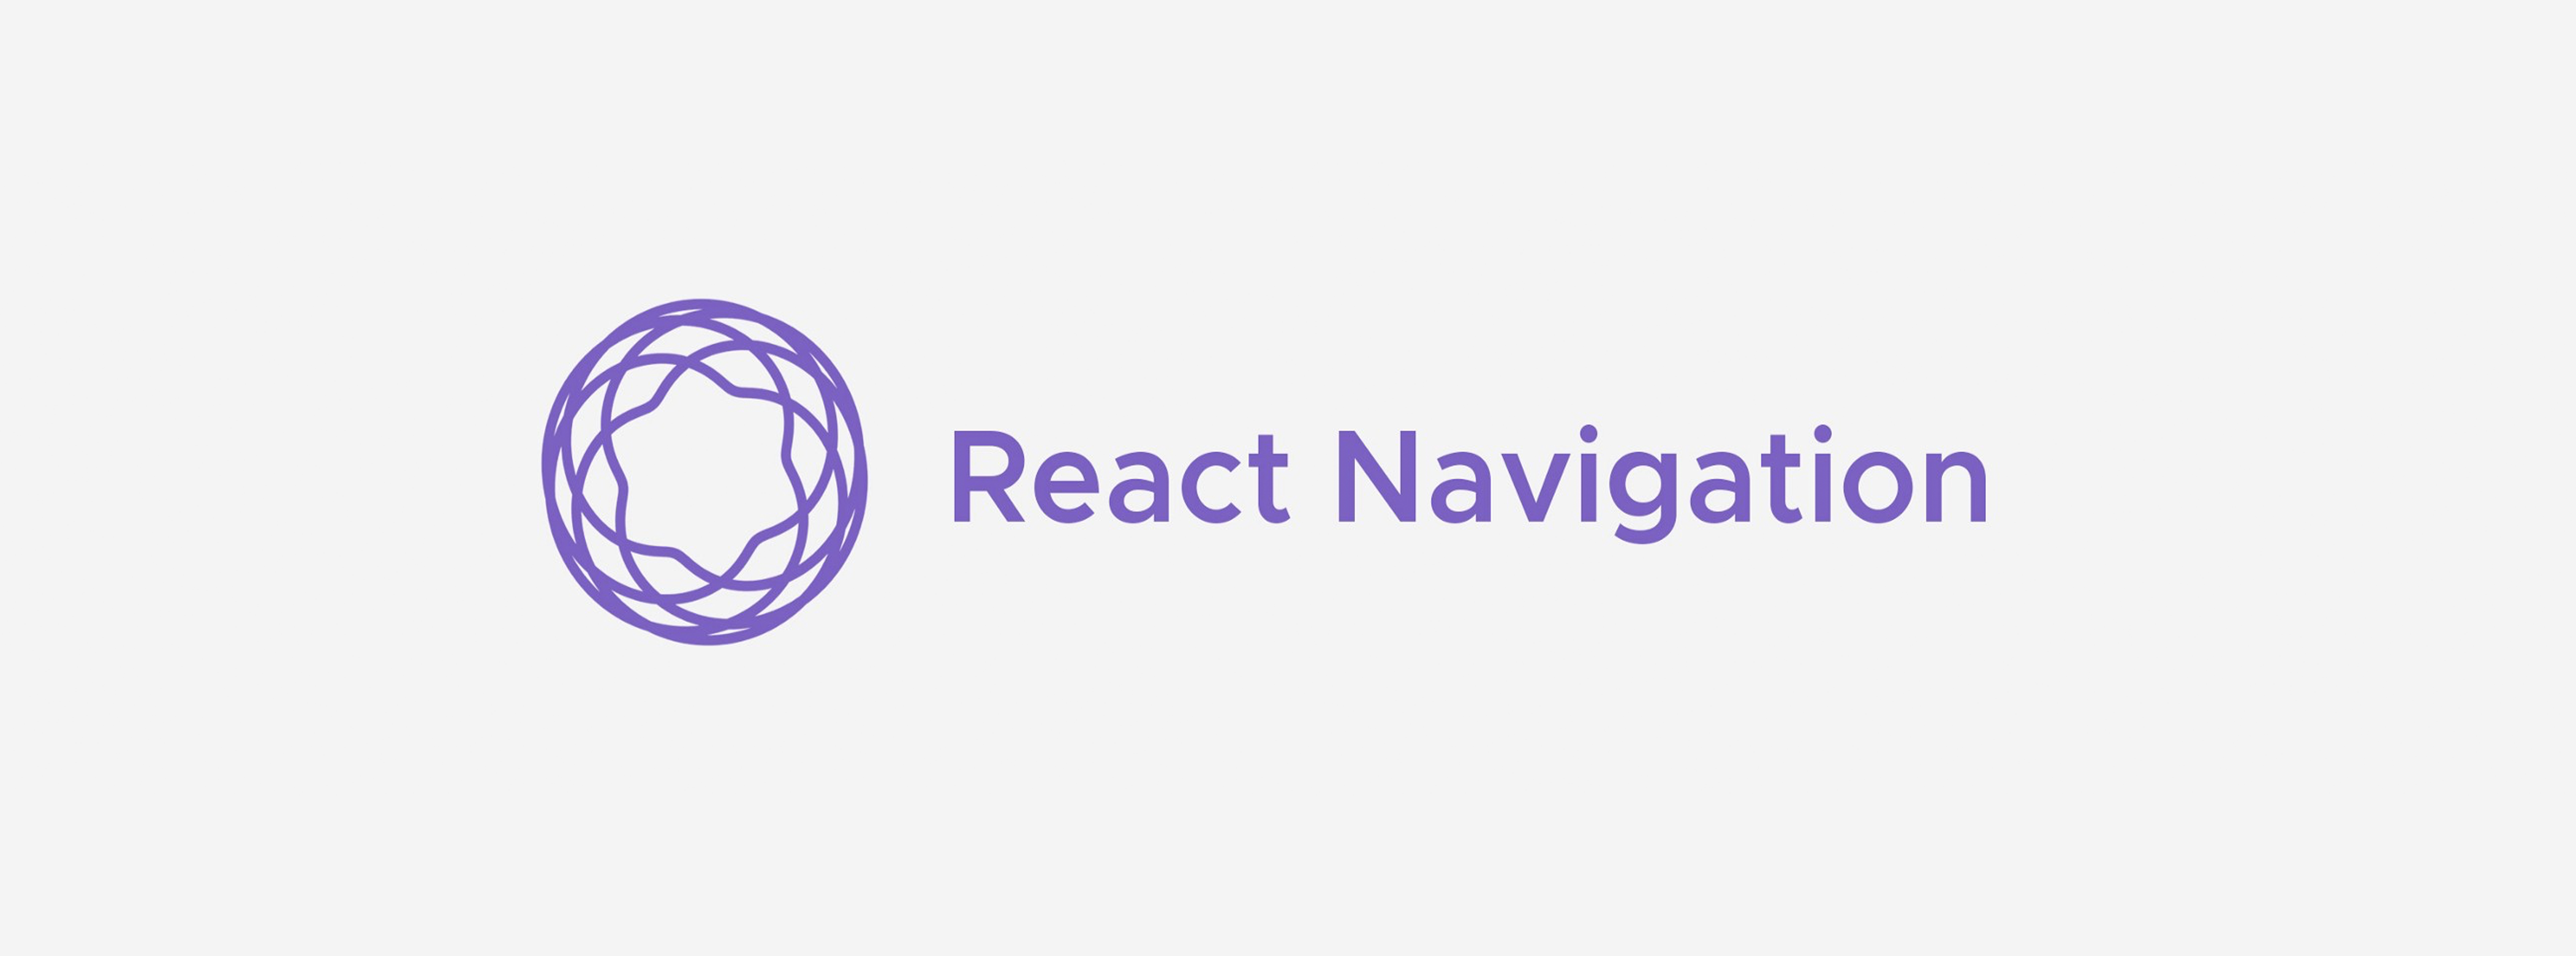 react navigation logo ile ilgili gÃ¶rsel sonucu